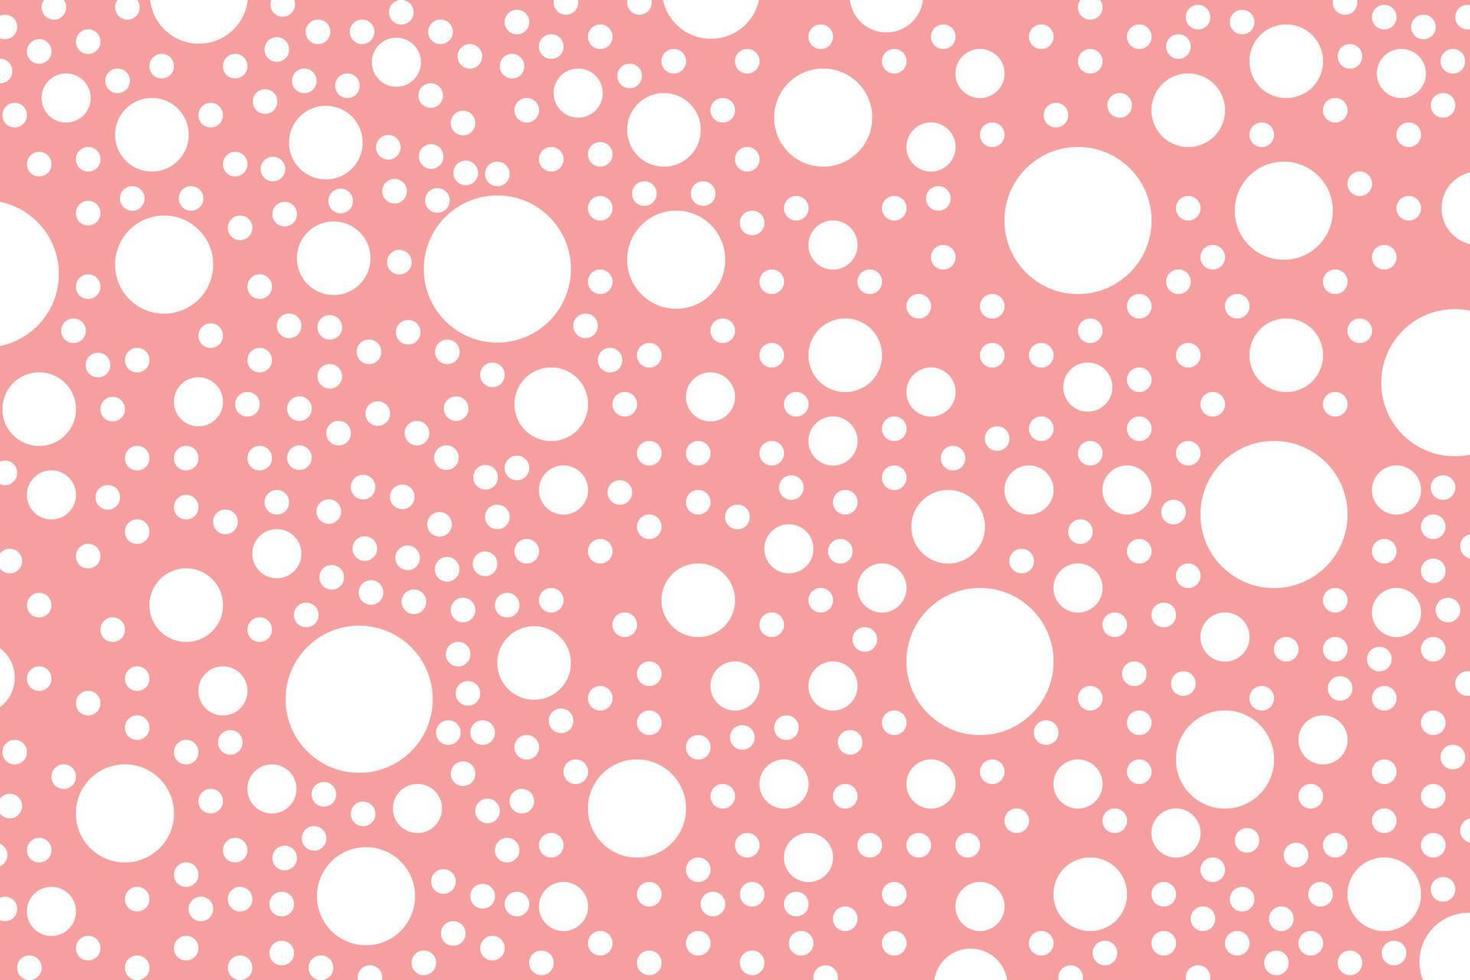 abstracto bastante lindo patrón de lunares retro elegante vintage rosa concepto de fondo ancho para impresión de moda vector